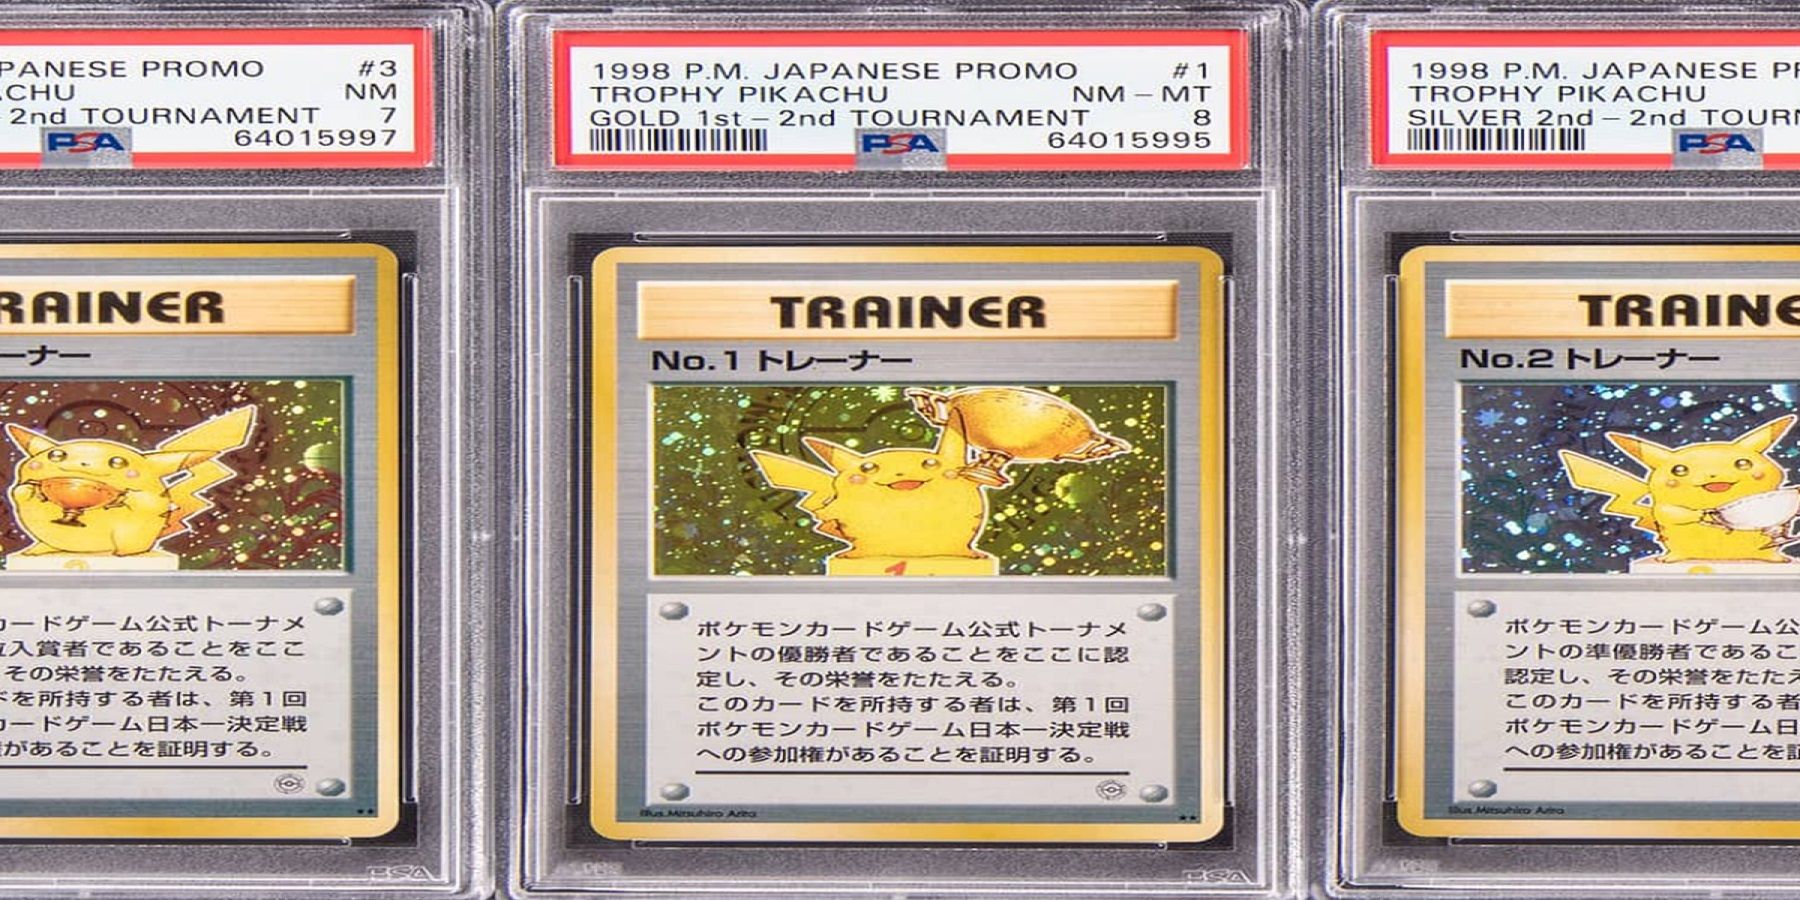 An original Pokemon tournament Pikachu trophy card has gone for $300,000 at auction.